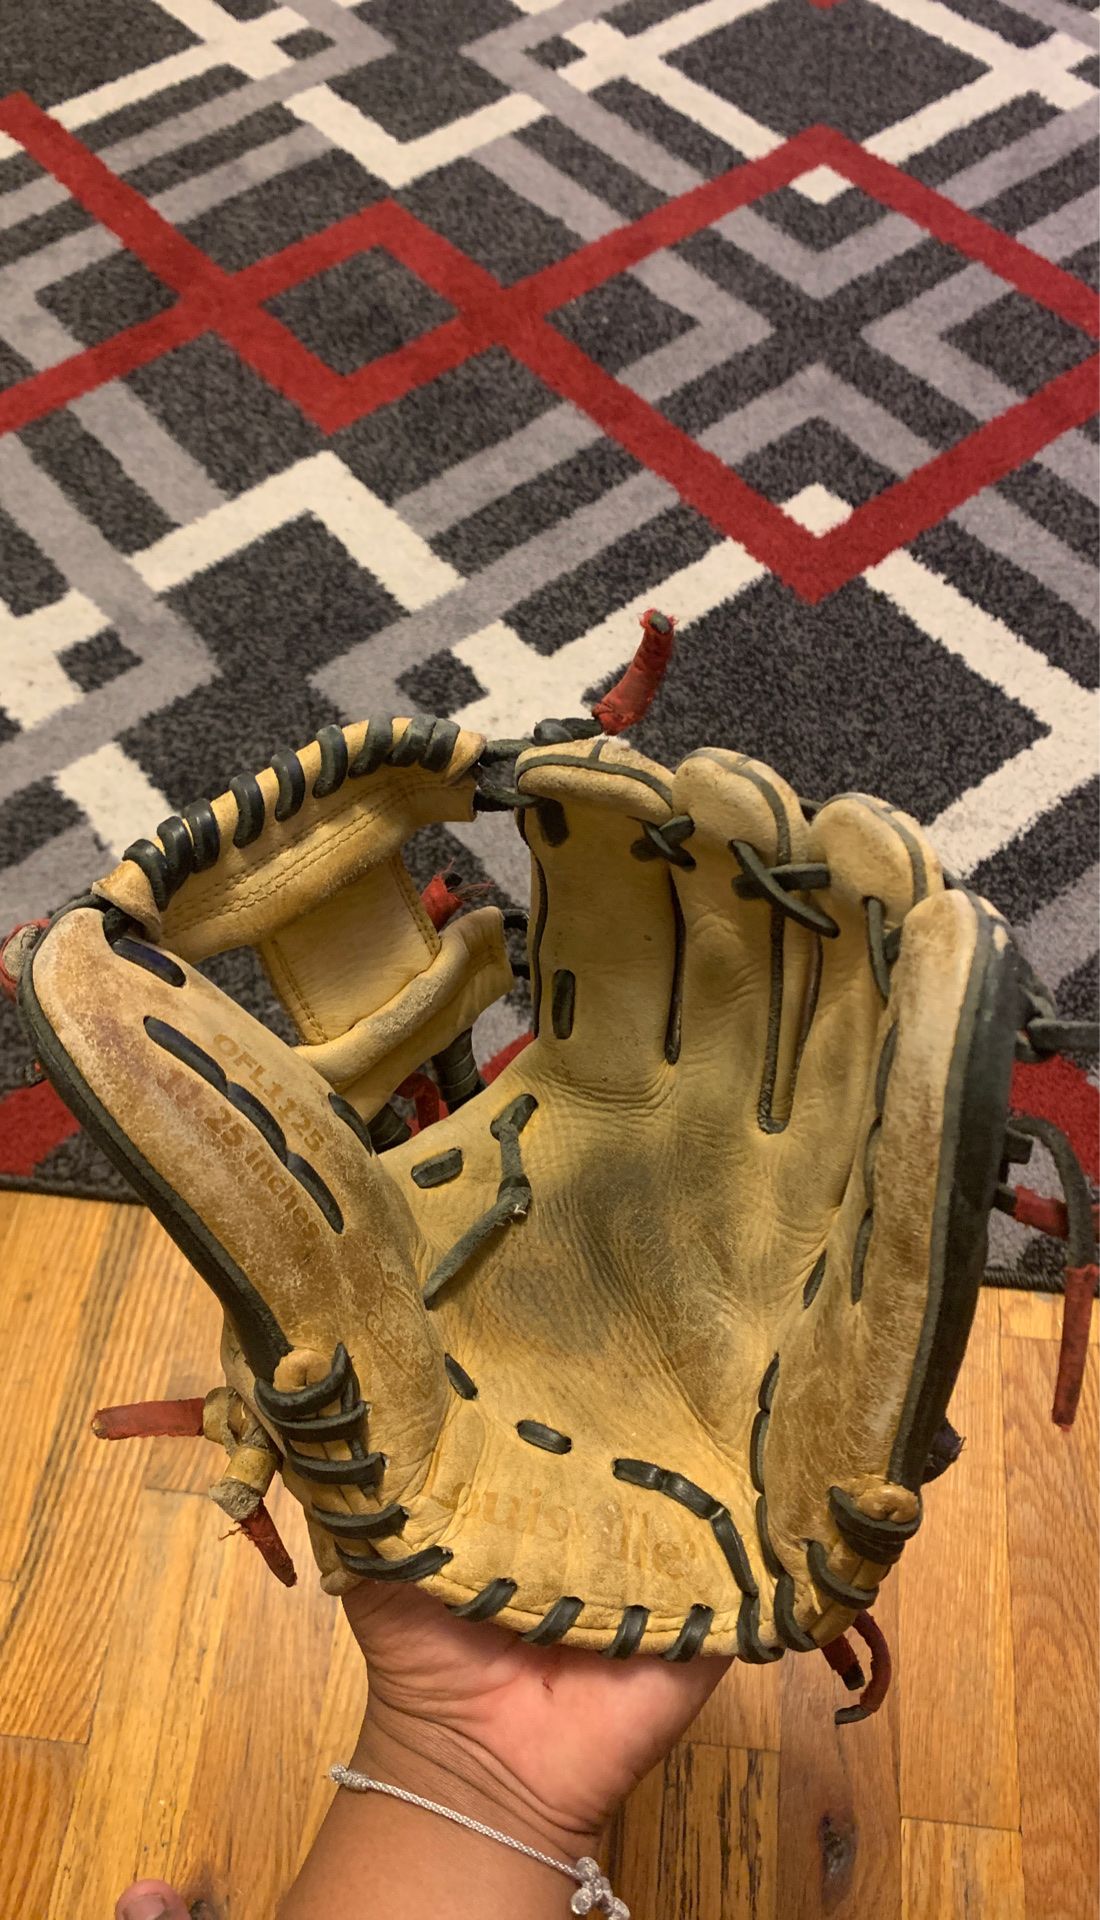 Louisville TPX baseball glove